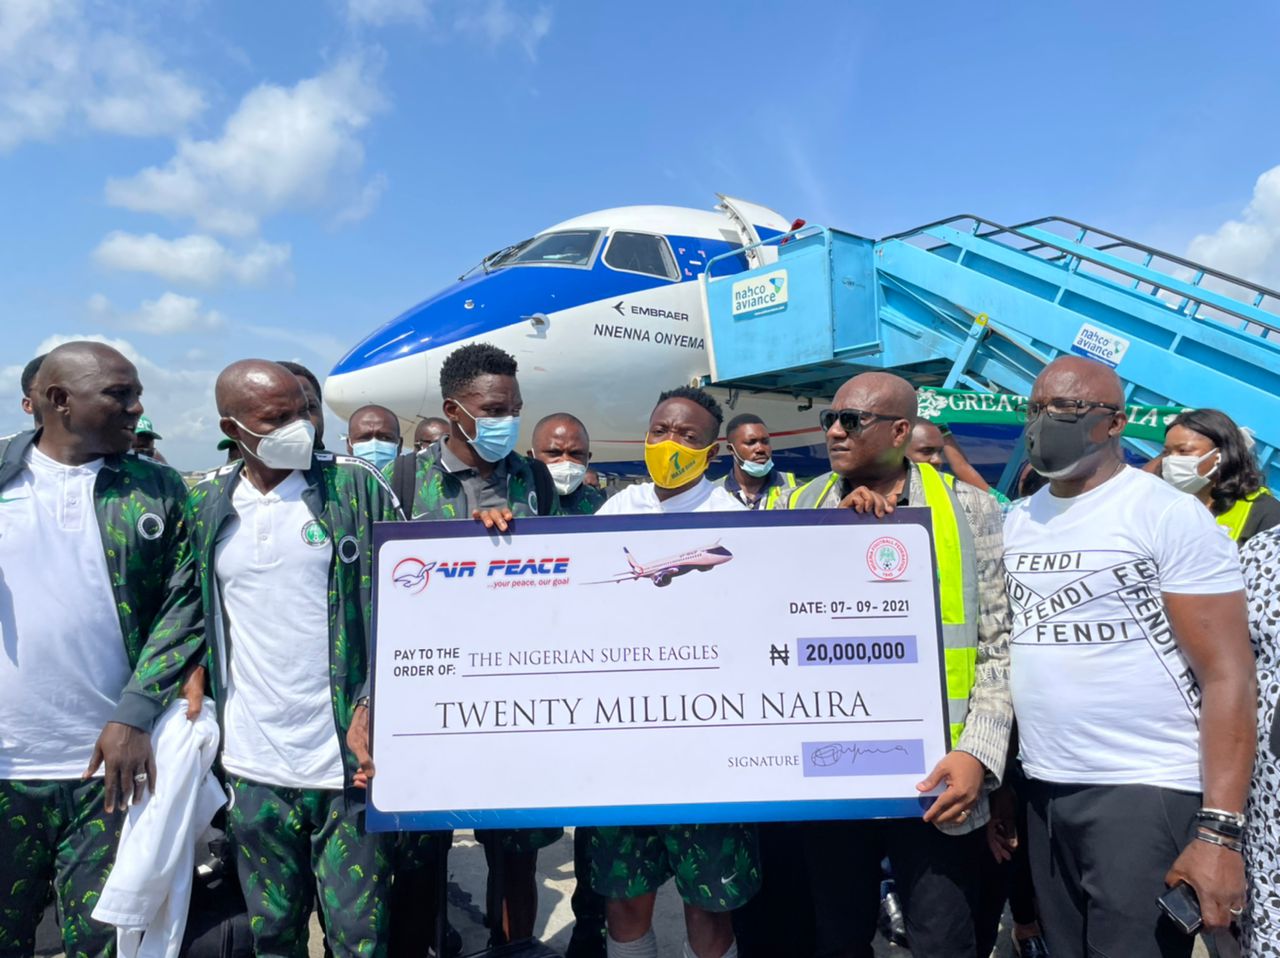 Air Peace CEO, Onyema Redeems N20m Pledge After Super Eagles’ Win Against Cape Verde